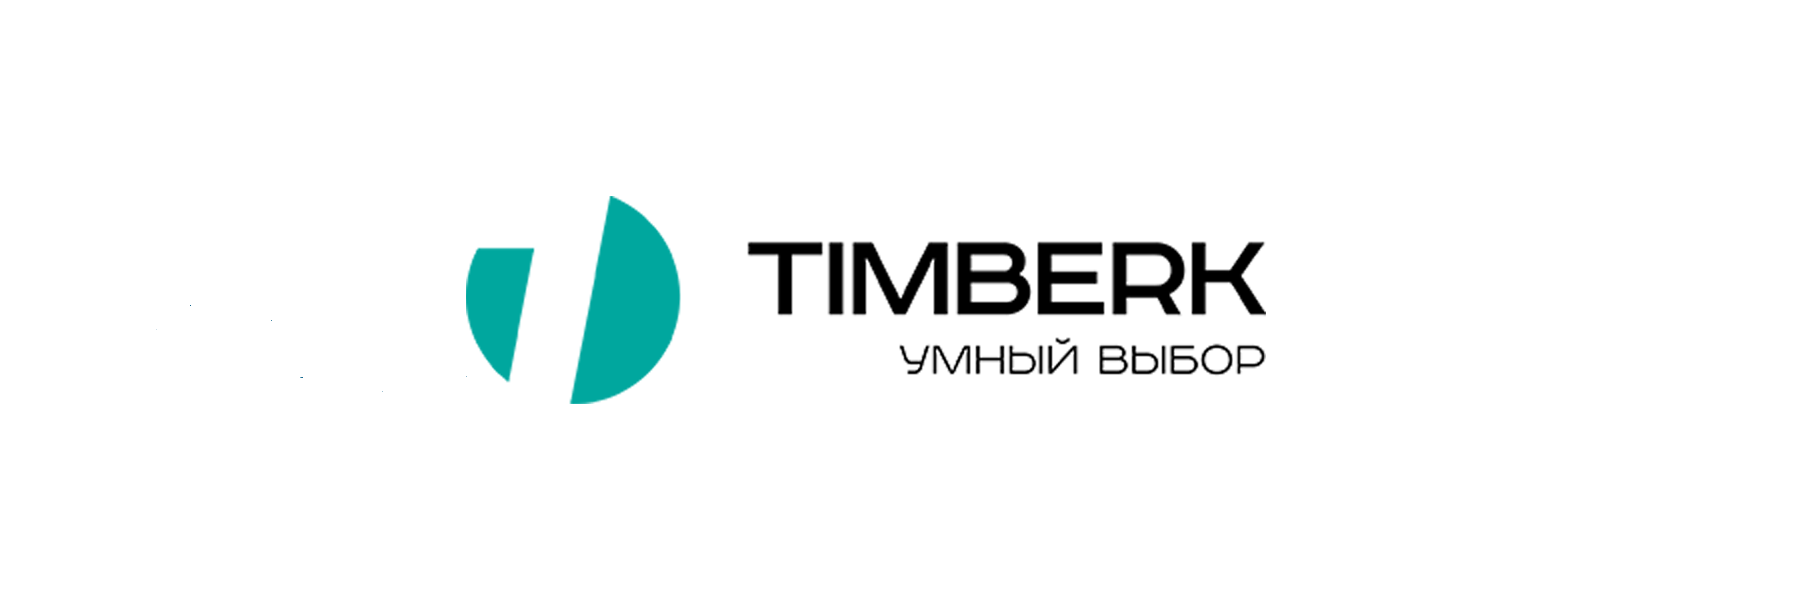 Timberk Splender 2016. В наличии!